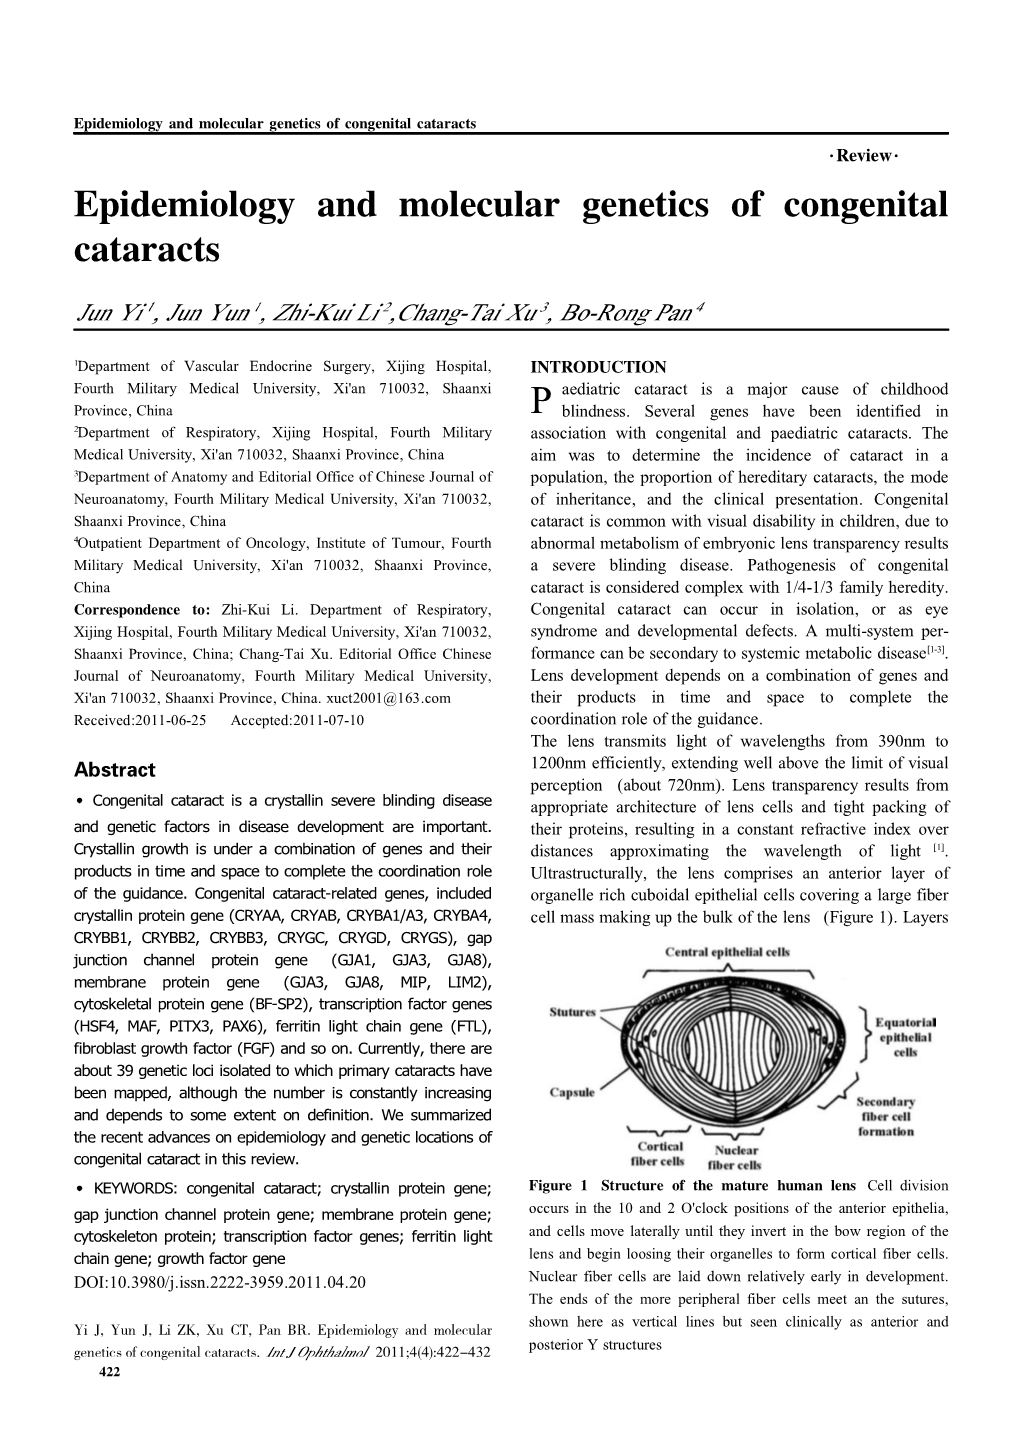 Epidemiology and Molecular Genetics of Congenital Cataracts